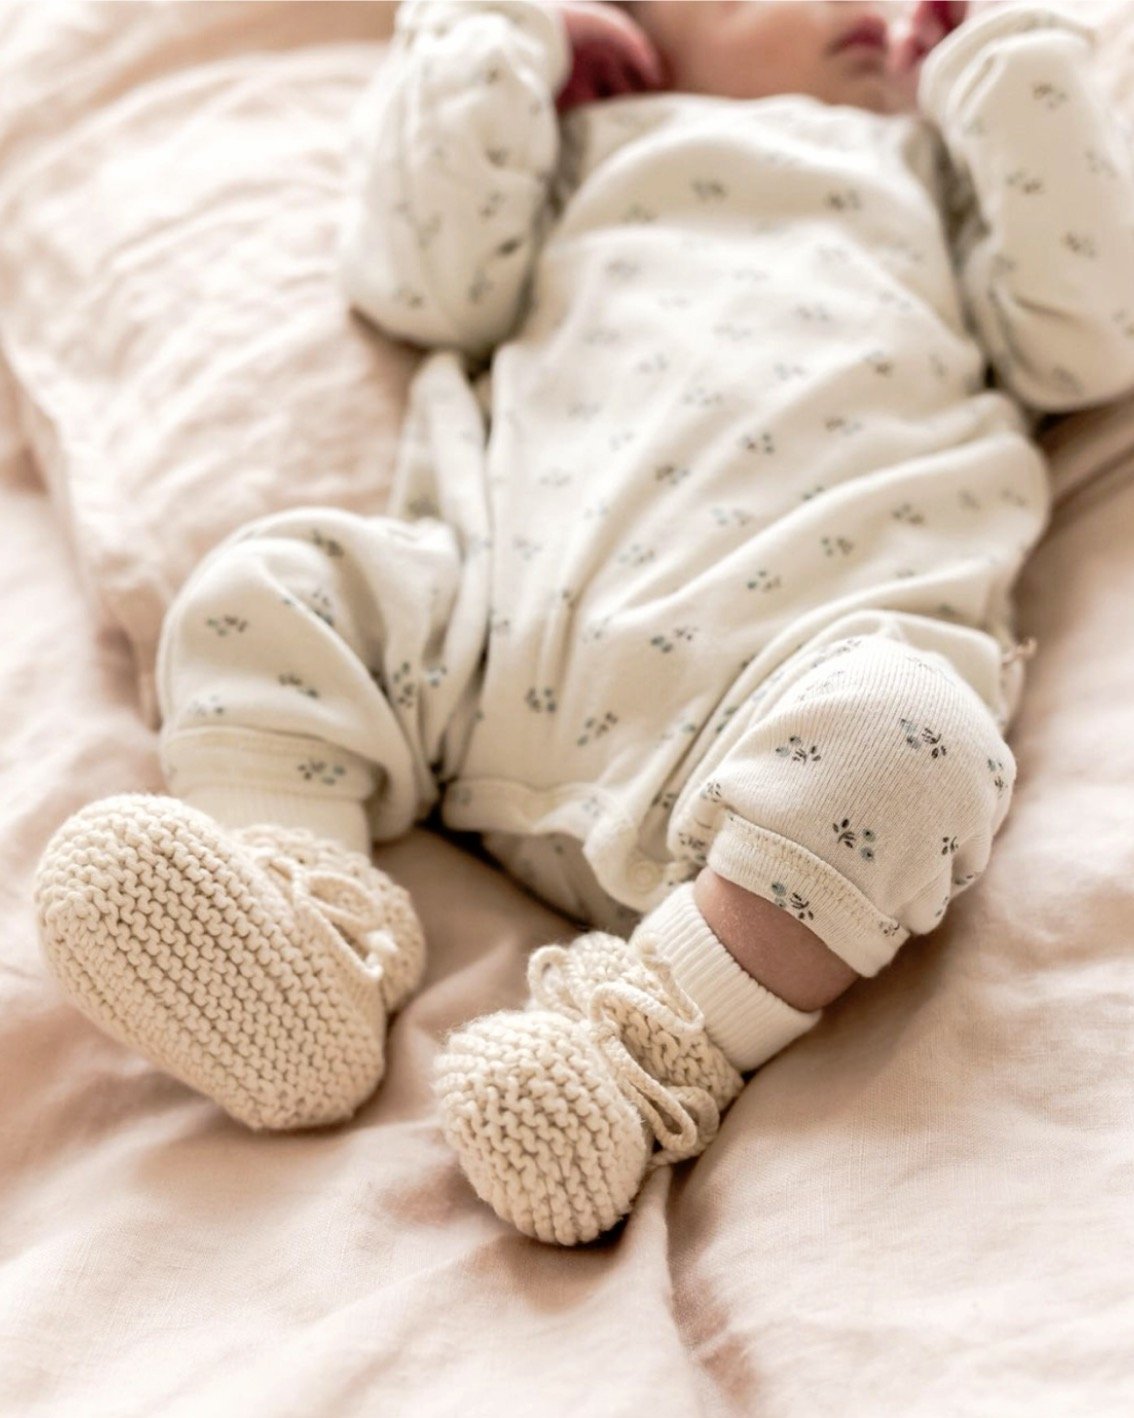 Pyjama bébé original fille - Idée cadeau de naissance - PETIT